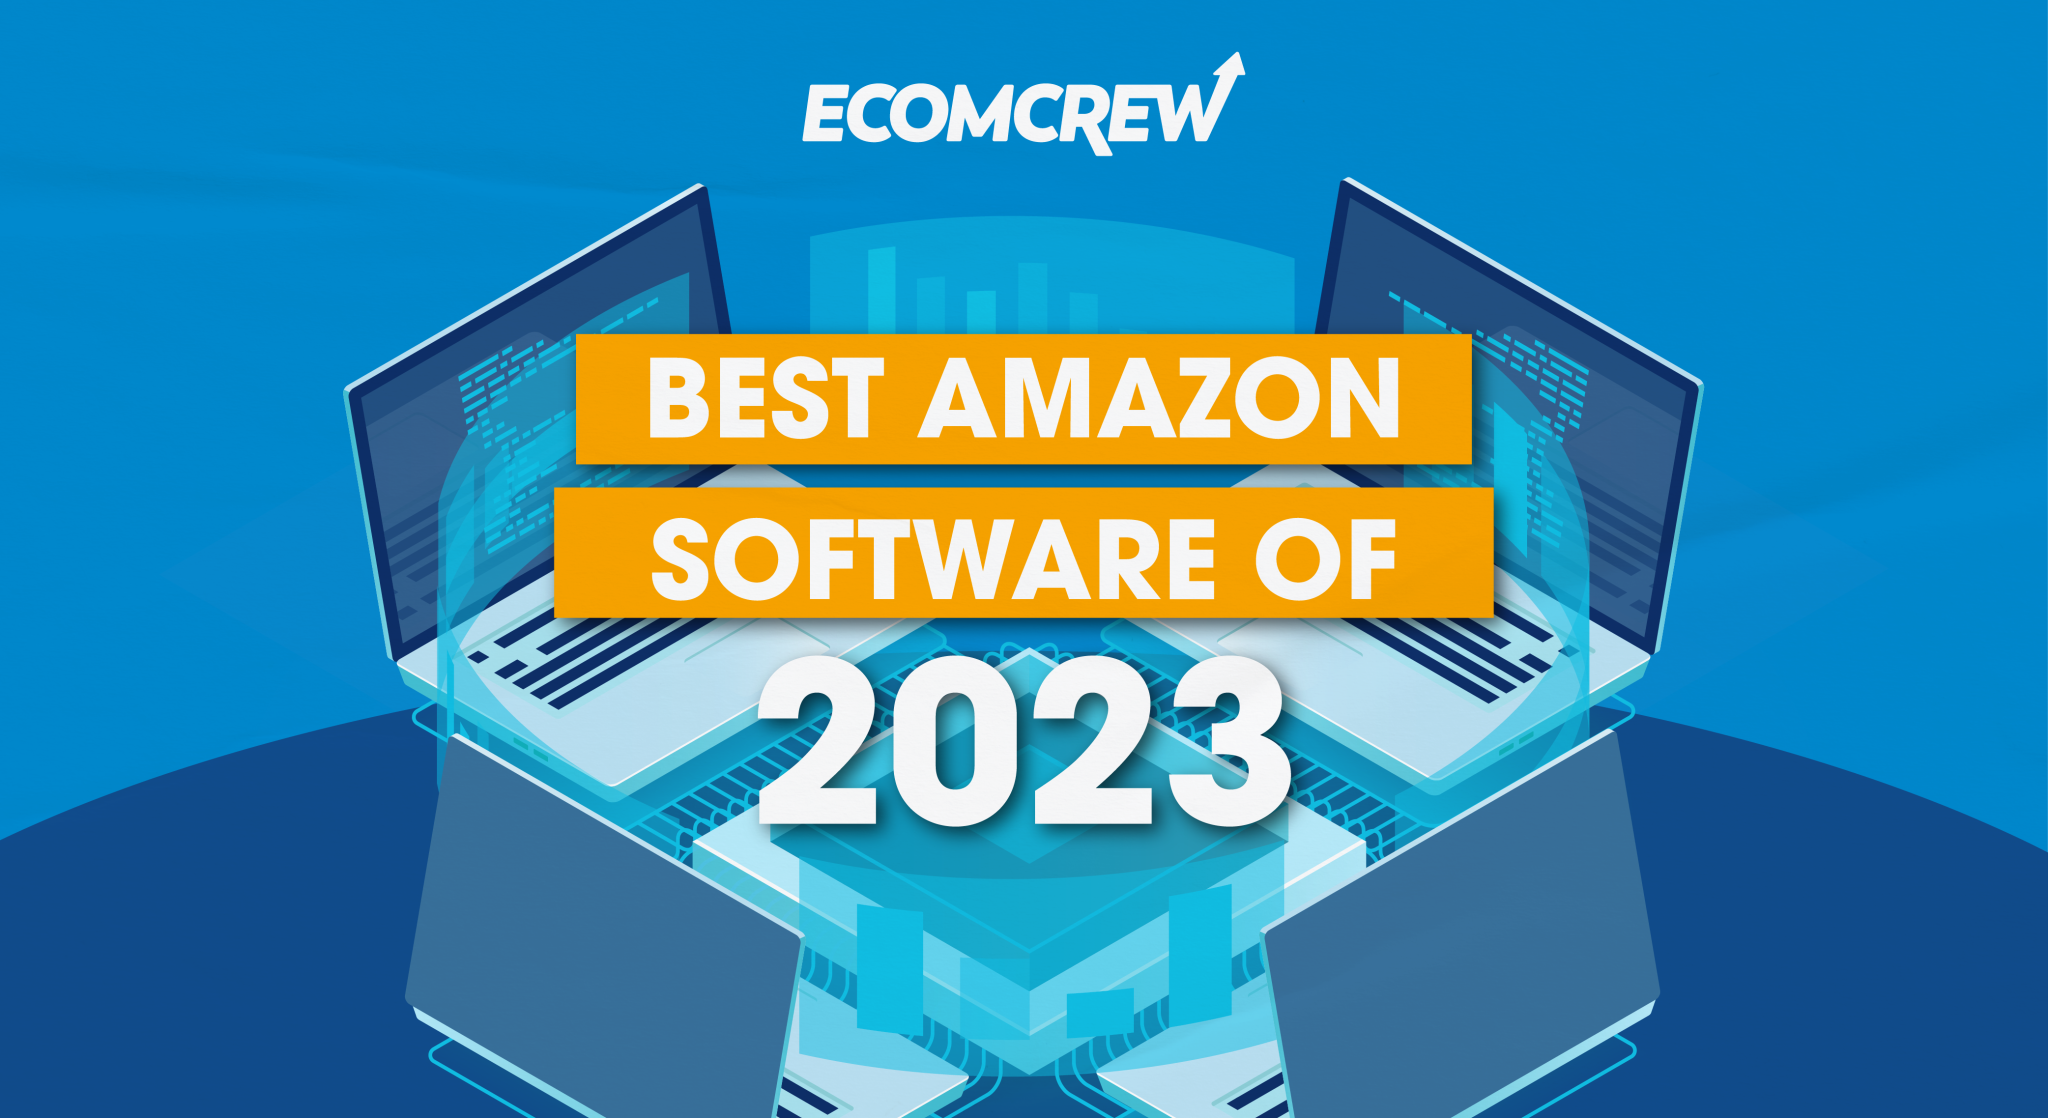 best Amazon software